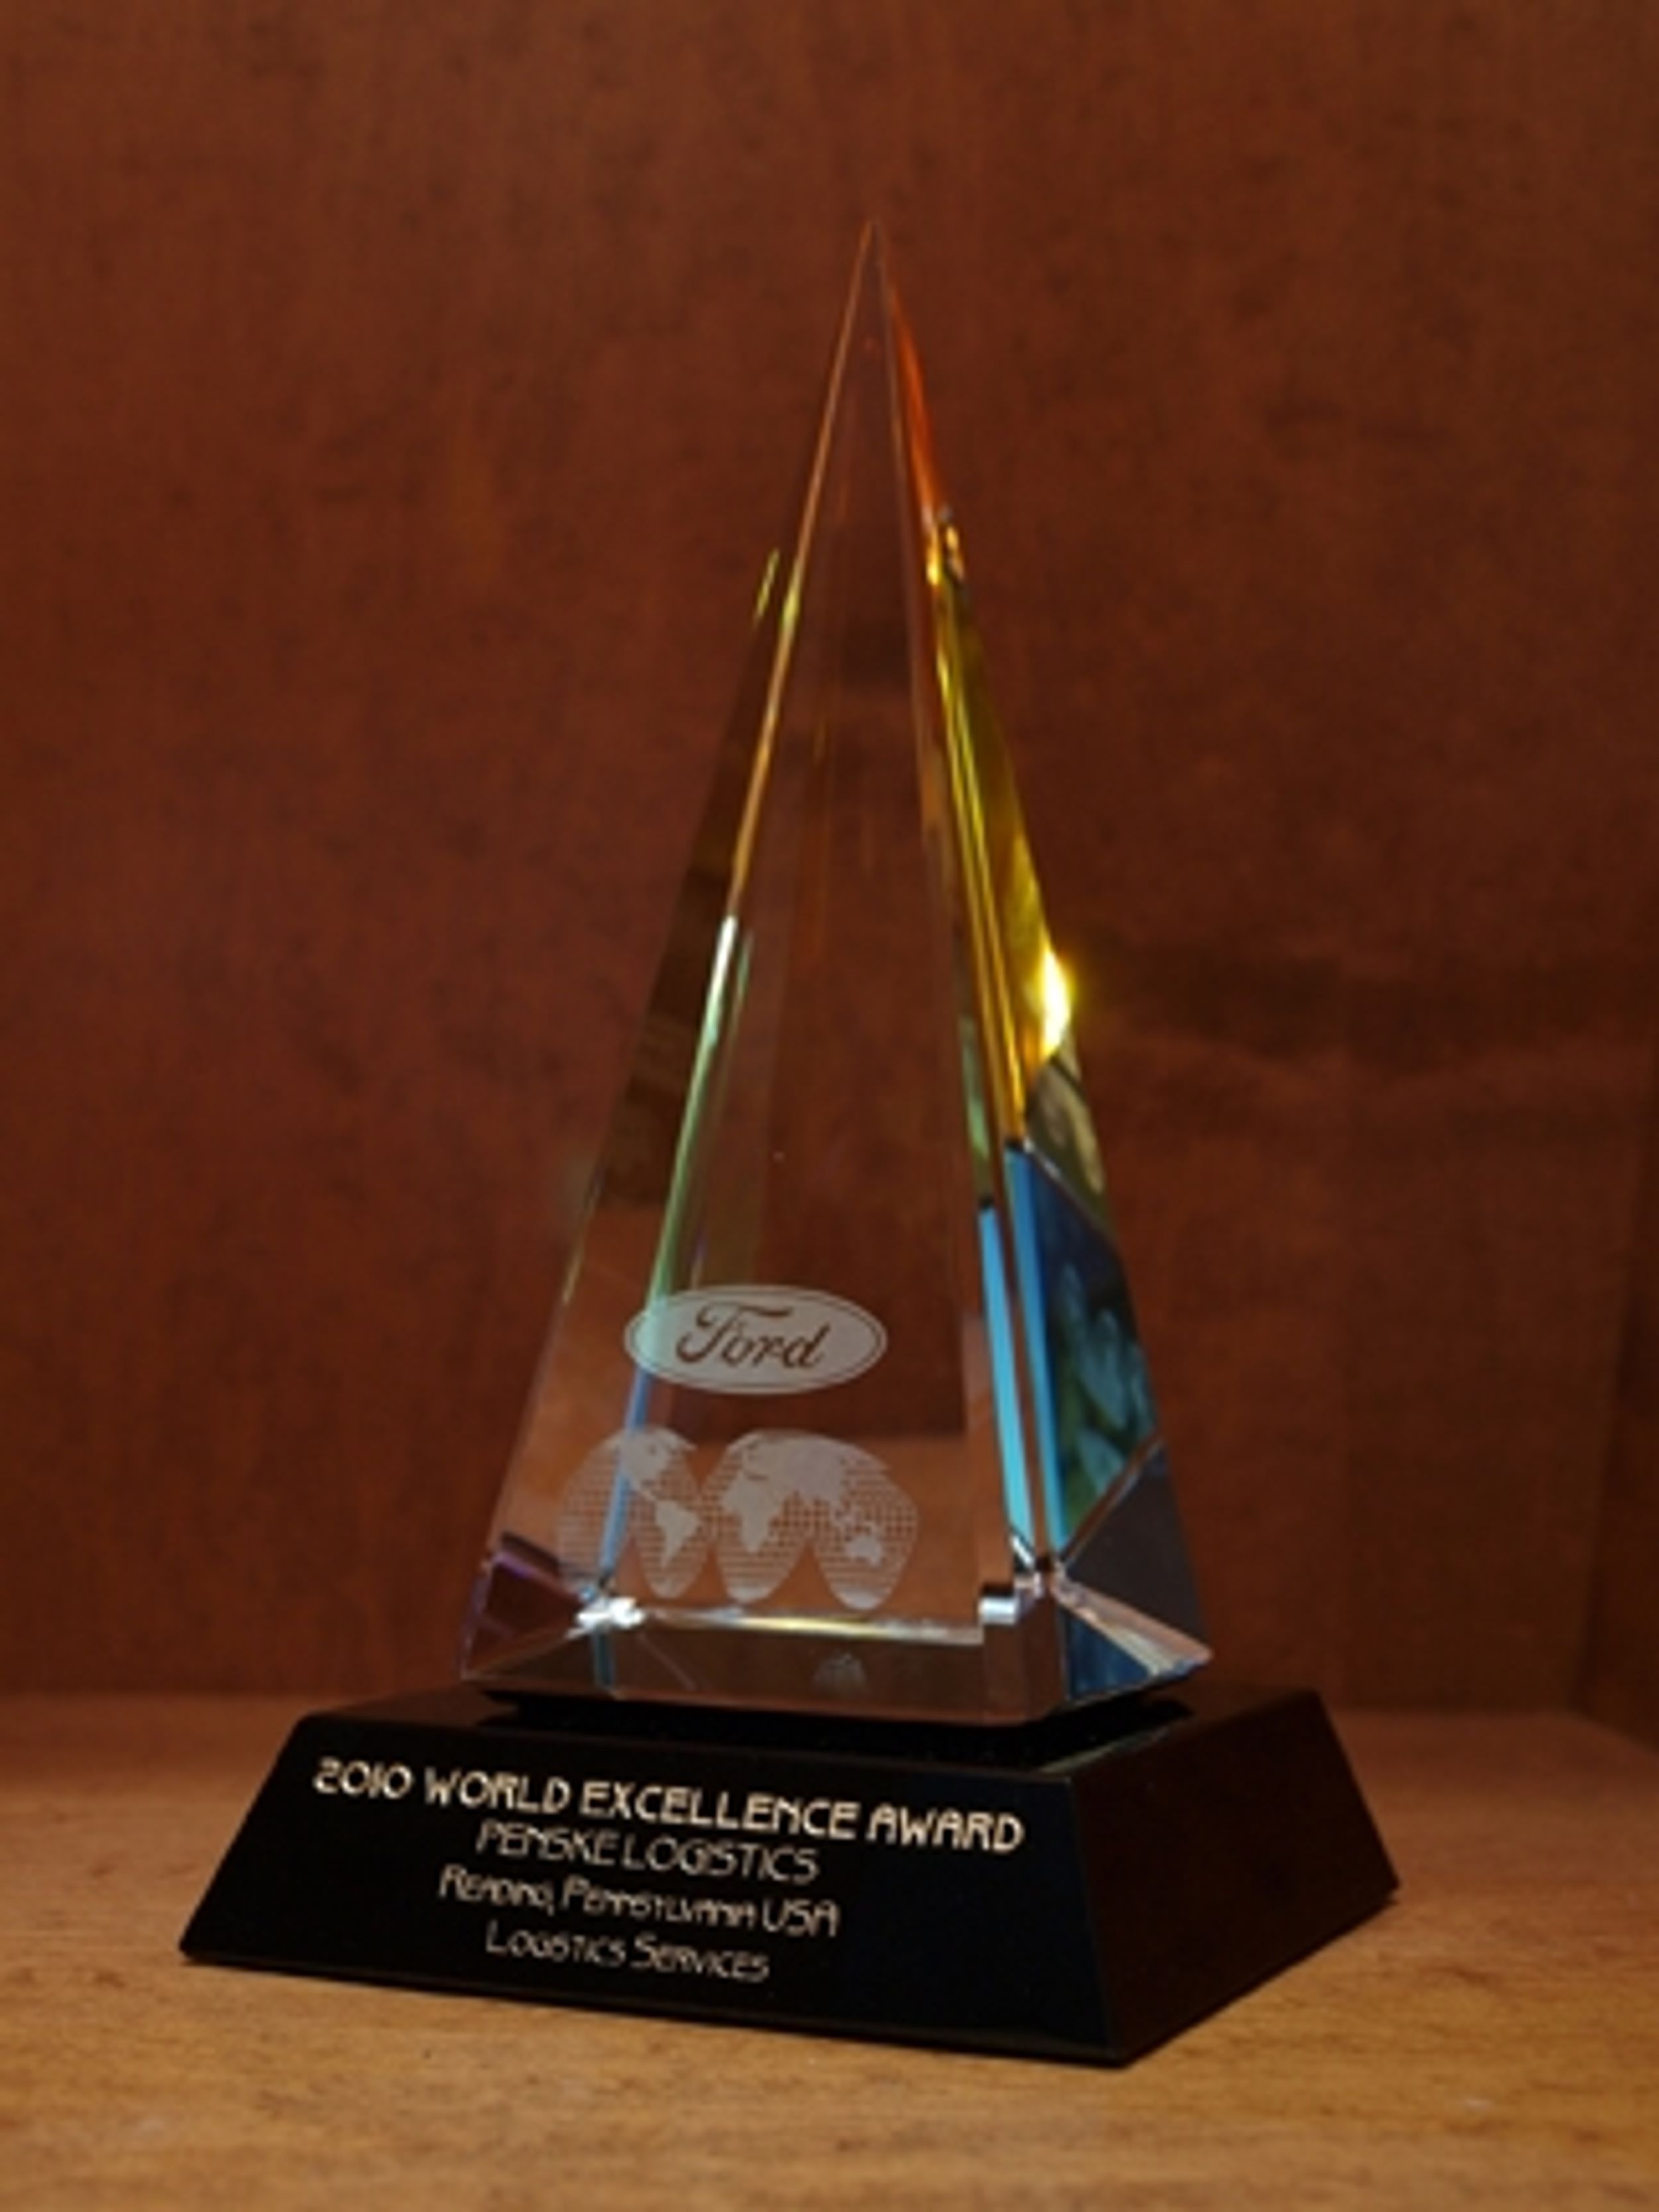 Penske Logistics Earns Ford Gold World Excellence Award